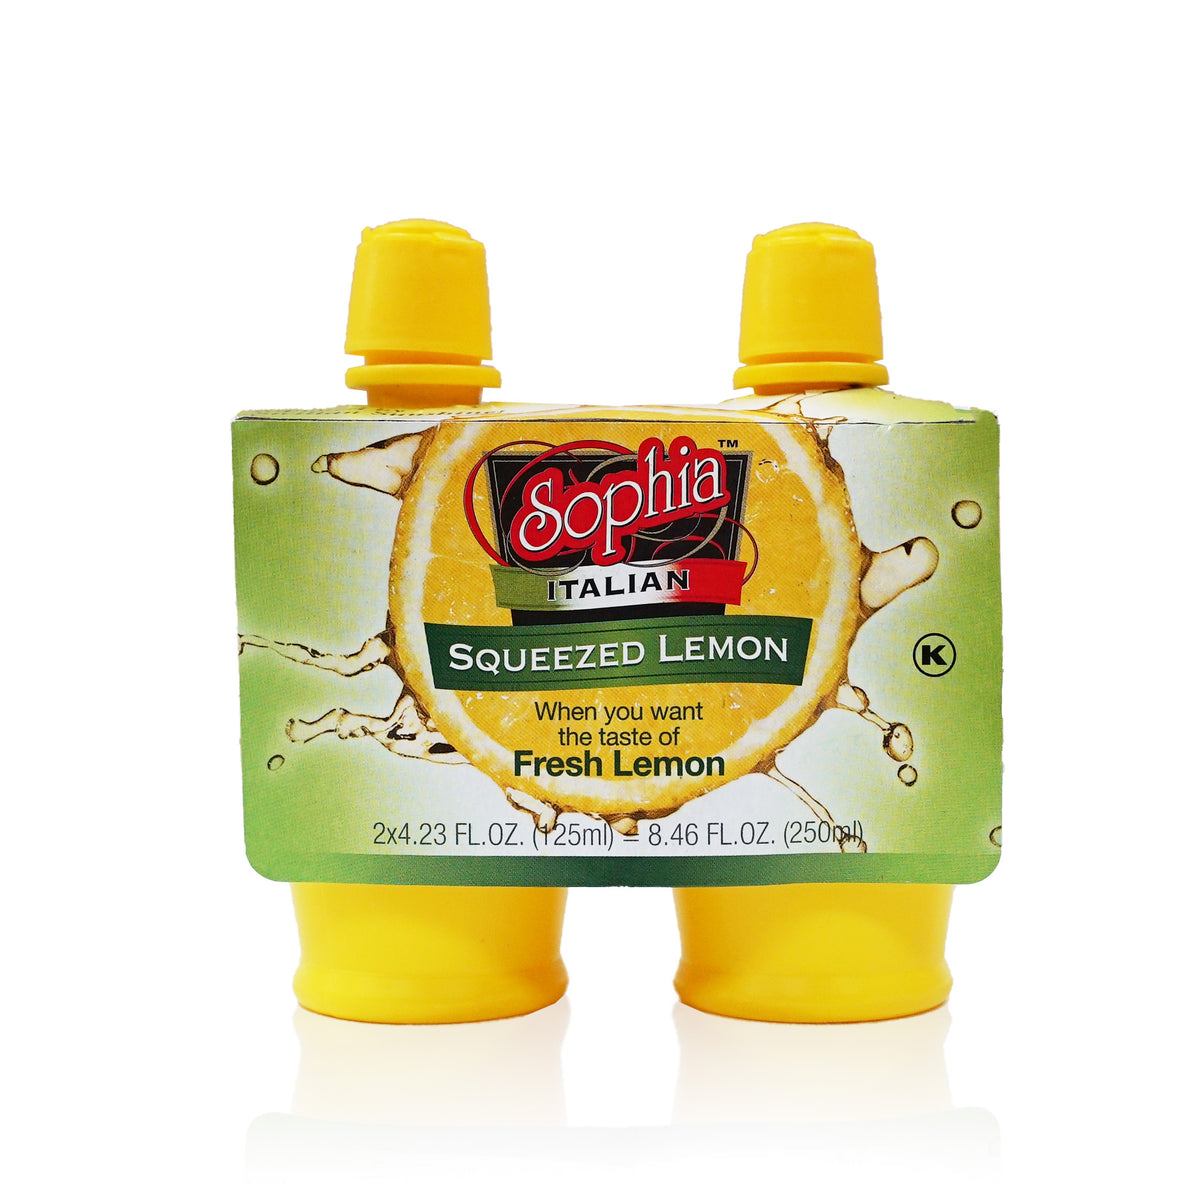 Sophia Lemon Juice Condiment from Sicily - Twin Pack